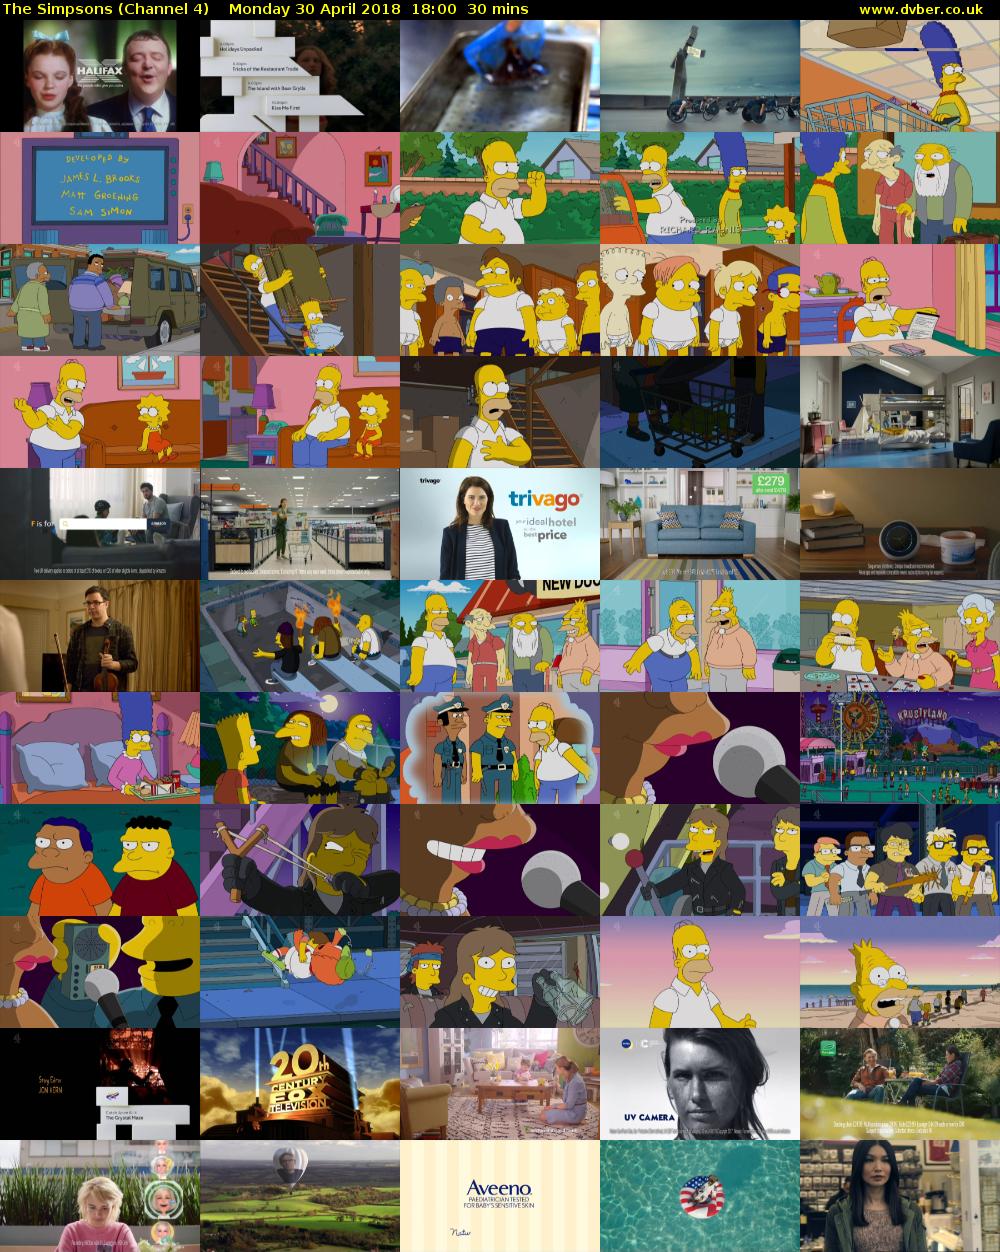 The Simpsons (Channel 4) Monday 30 April 2018 18:00 - 18:30